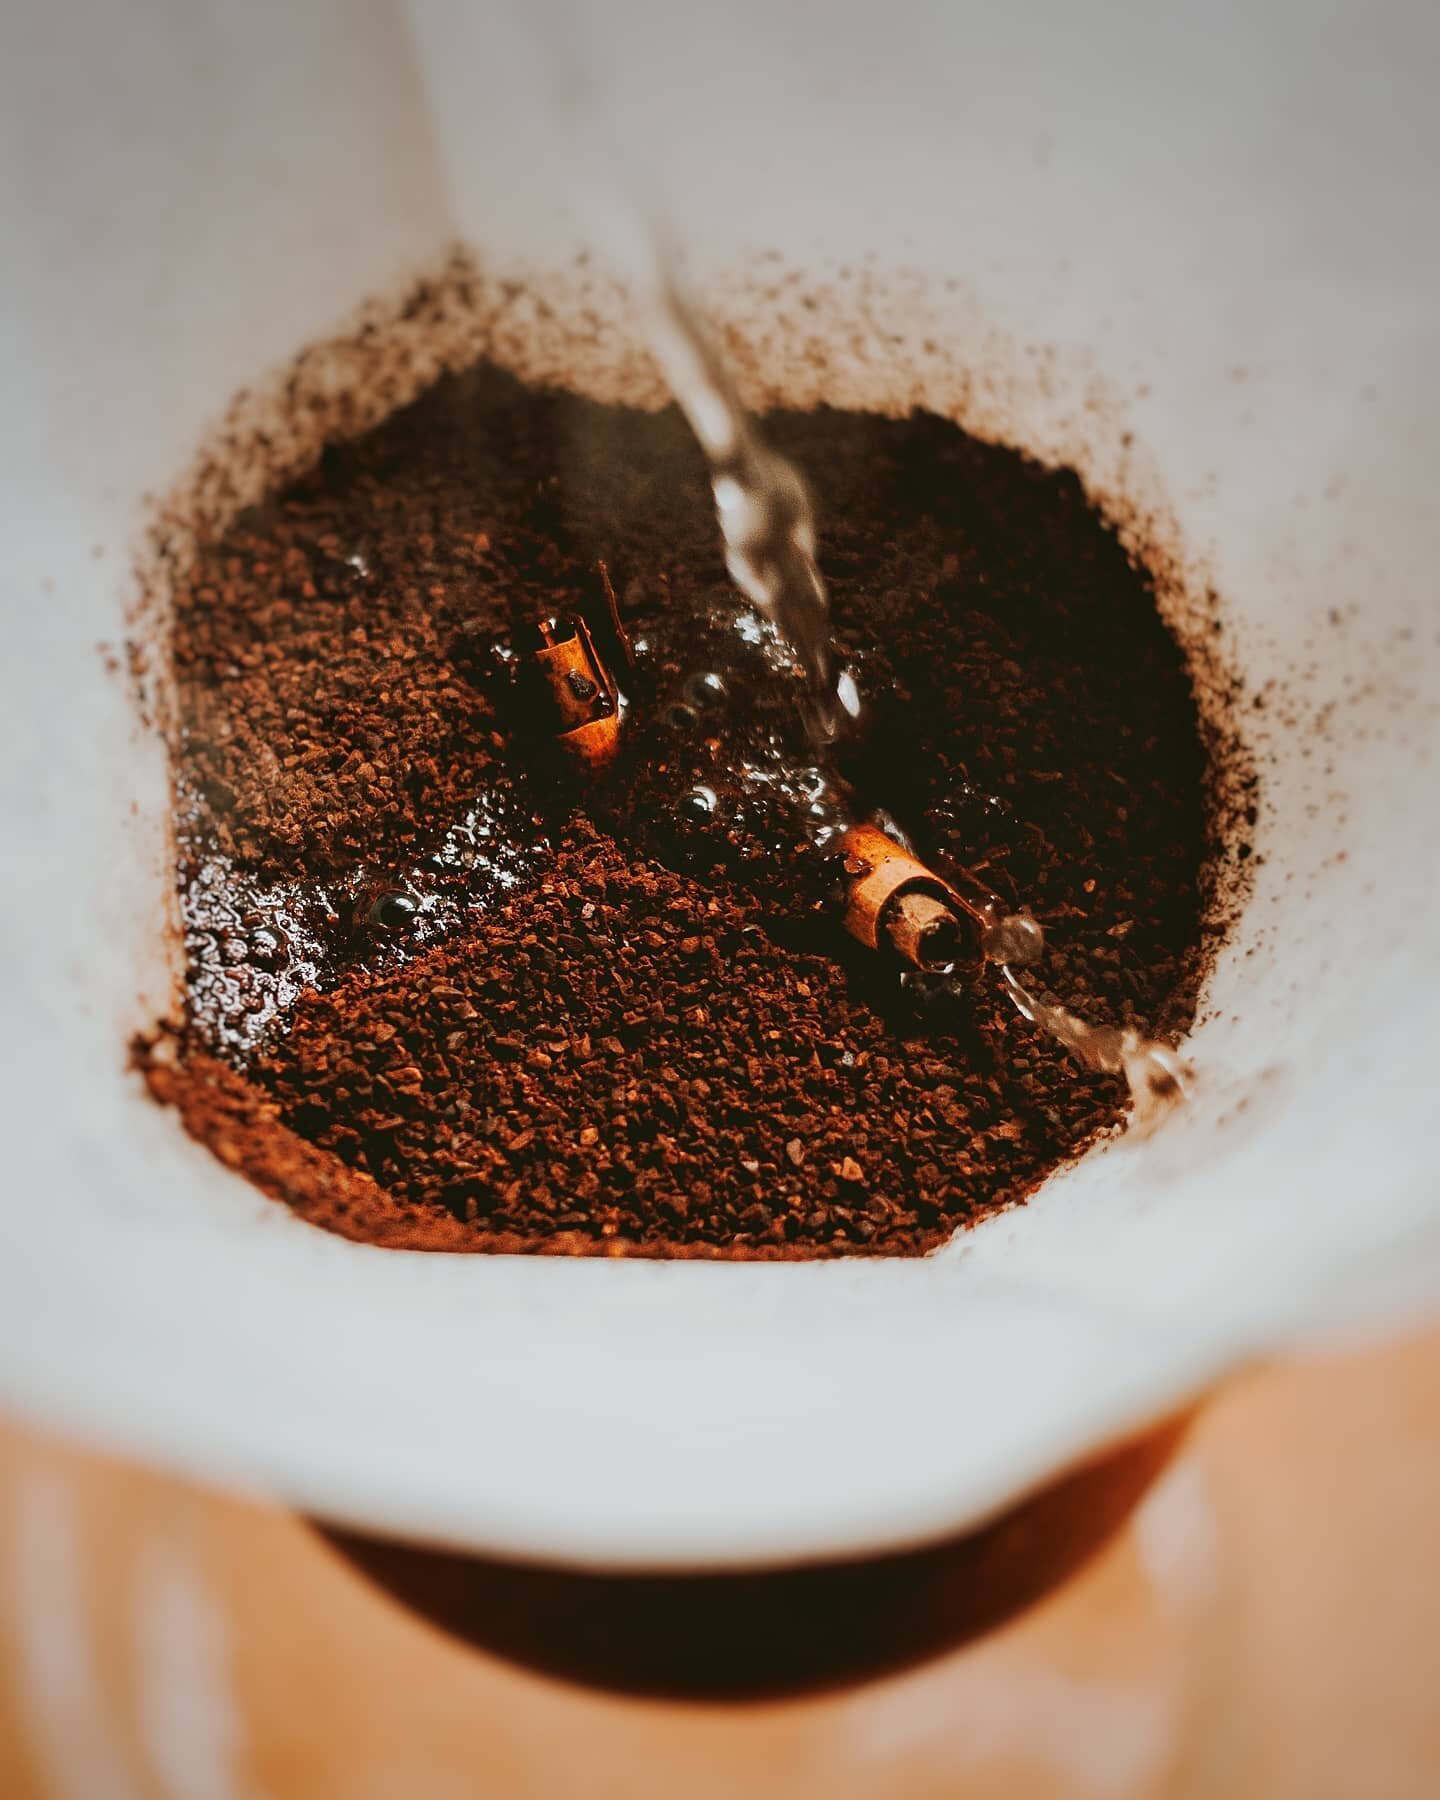 Good Morning.

A lil cinnamon in your brew goes a long way. Trust me.

#kylearchibaldphotography #chemex #chemexcoffee #coffee #fullbloomcoffeett #fullbloomcoffeeroasters #caffeinefix #brewmethods #cinnamoncoffee